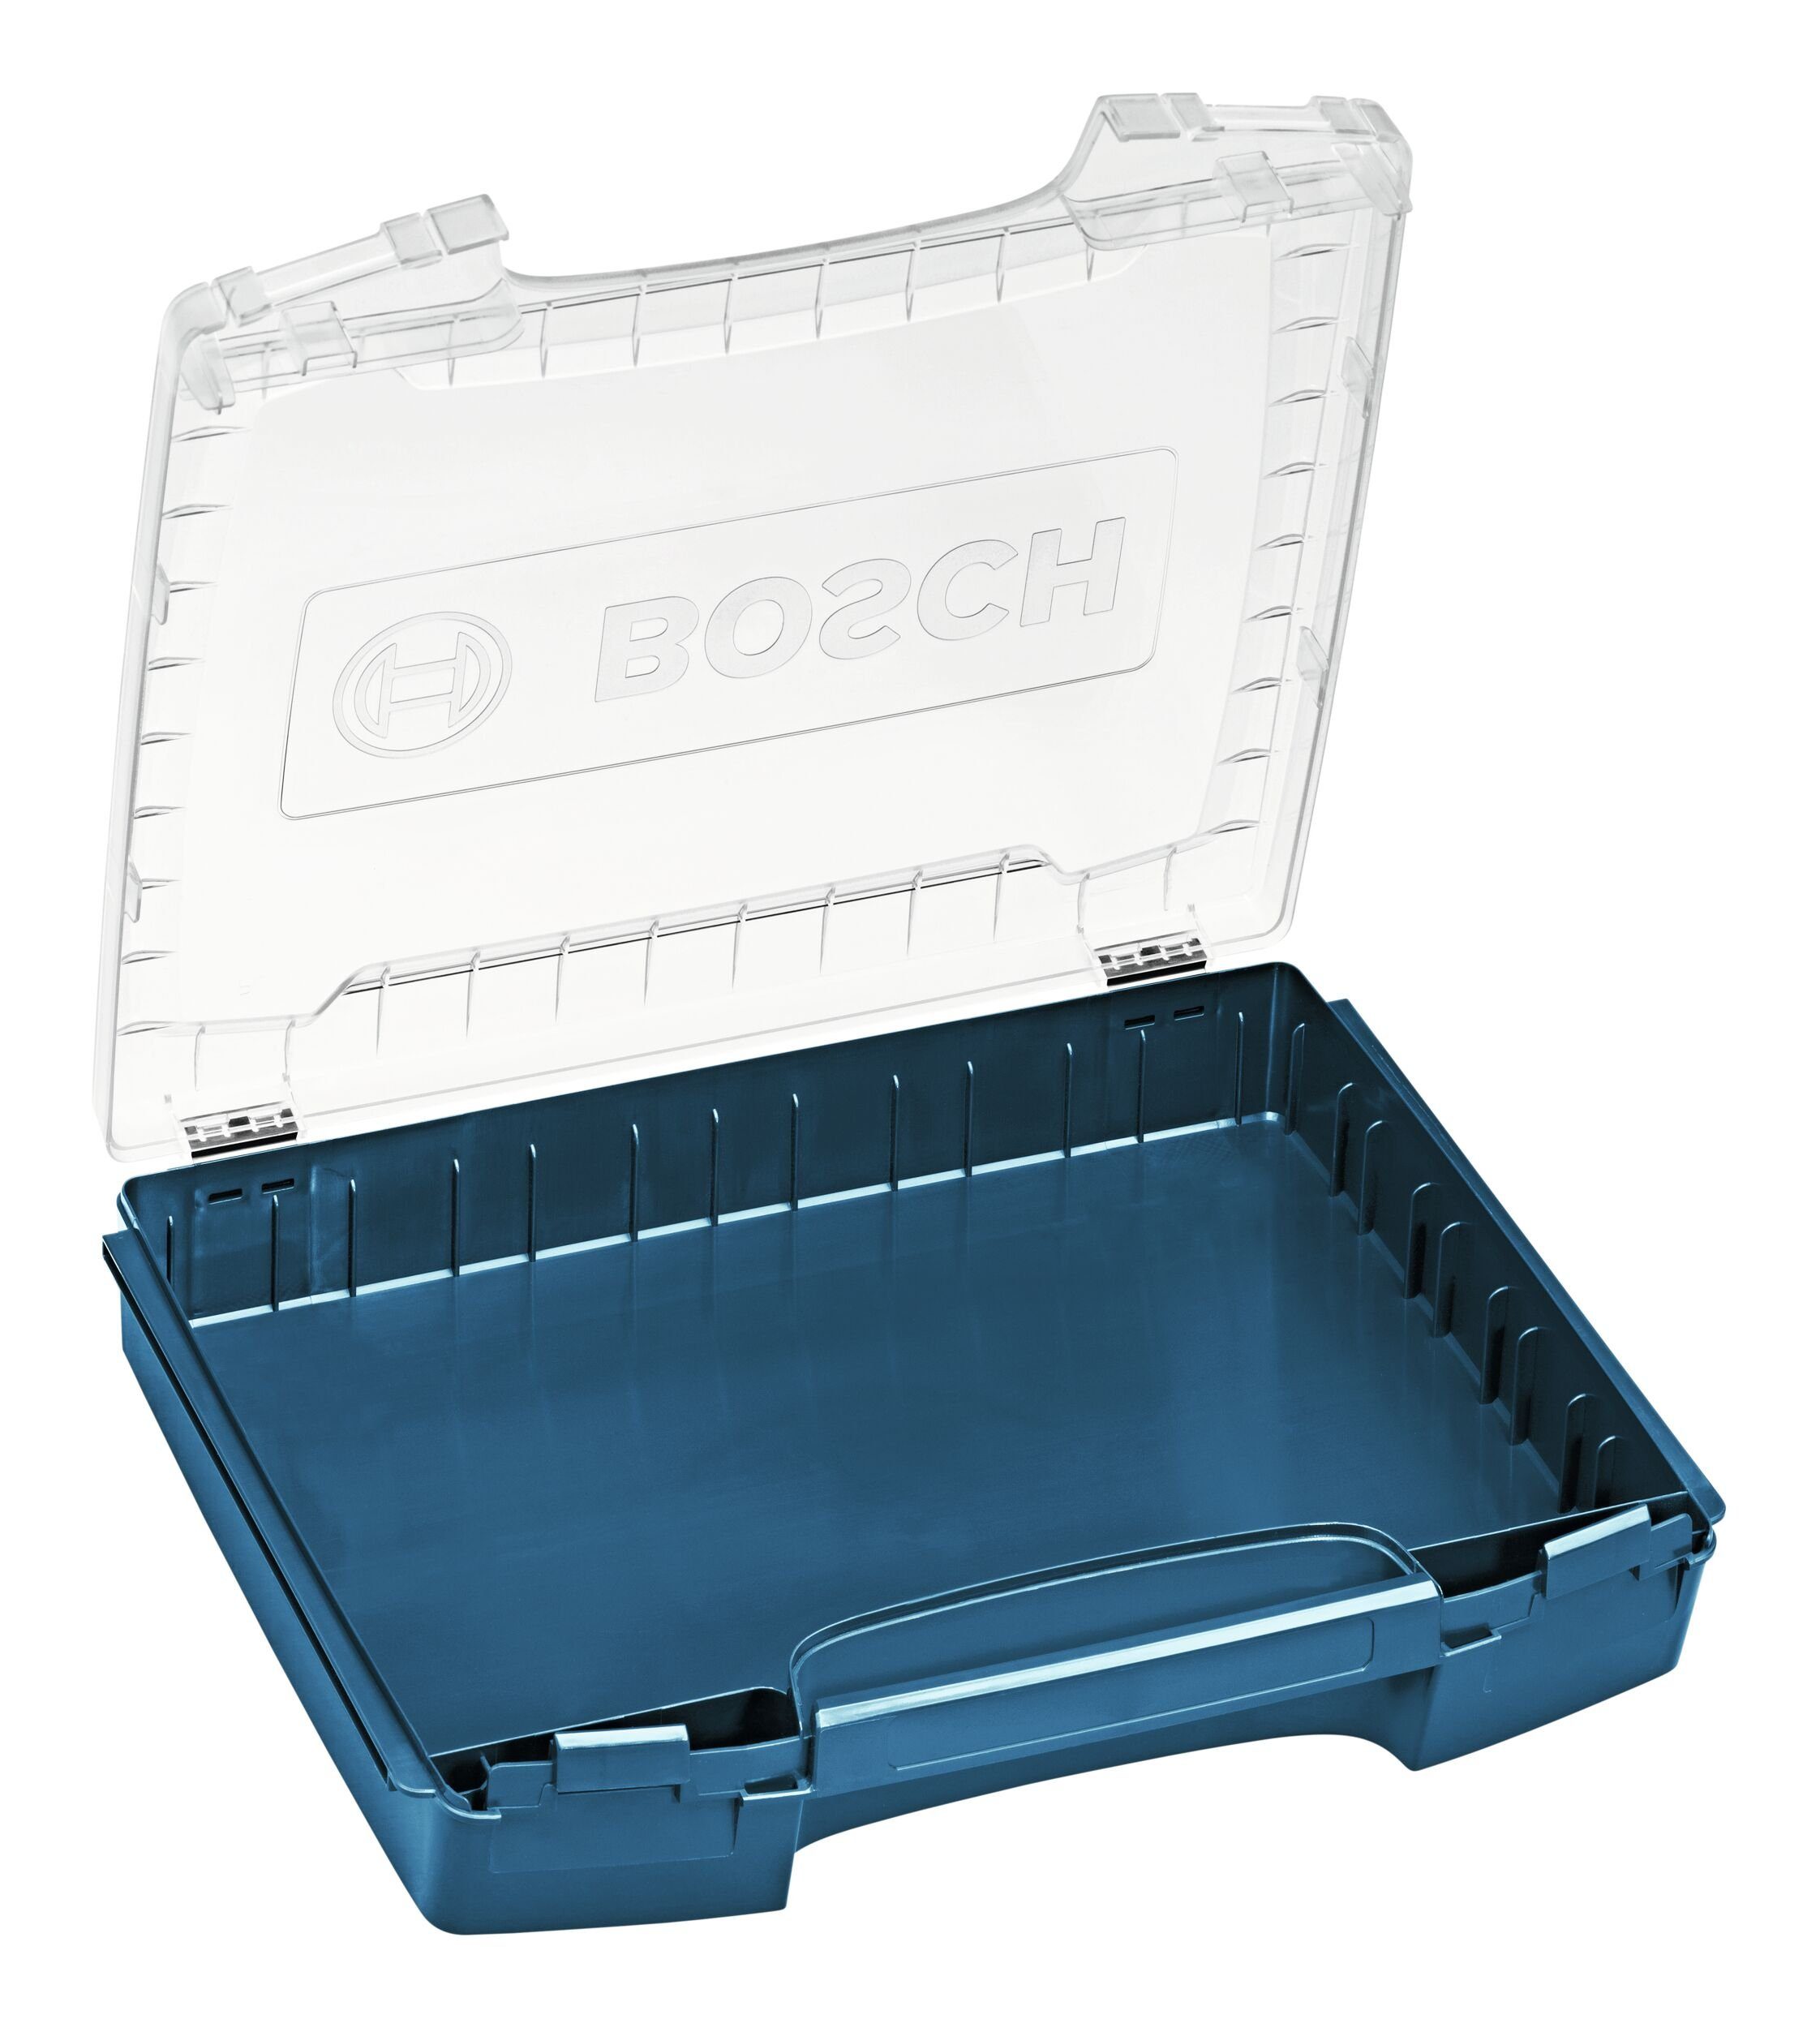 53 Koffersystem Professional 367 I-BOXX mm - Bosch 72 x Werkzeugkoffer Professional, 313 x